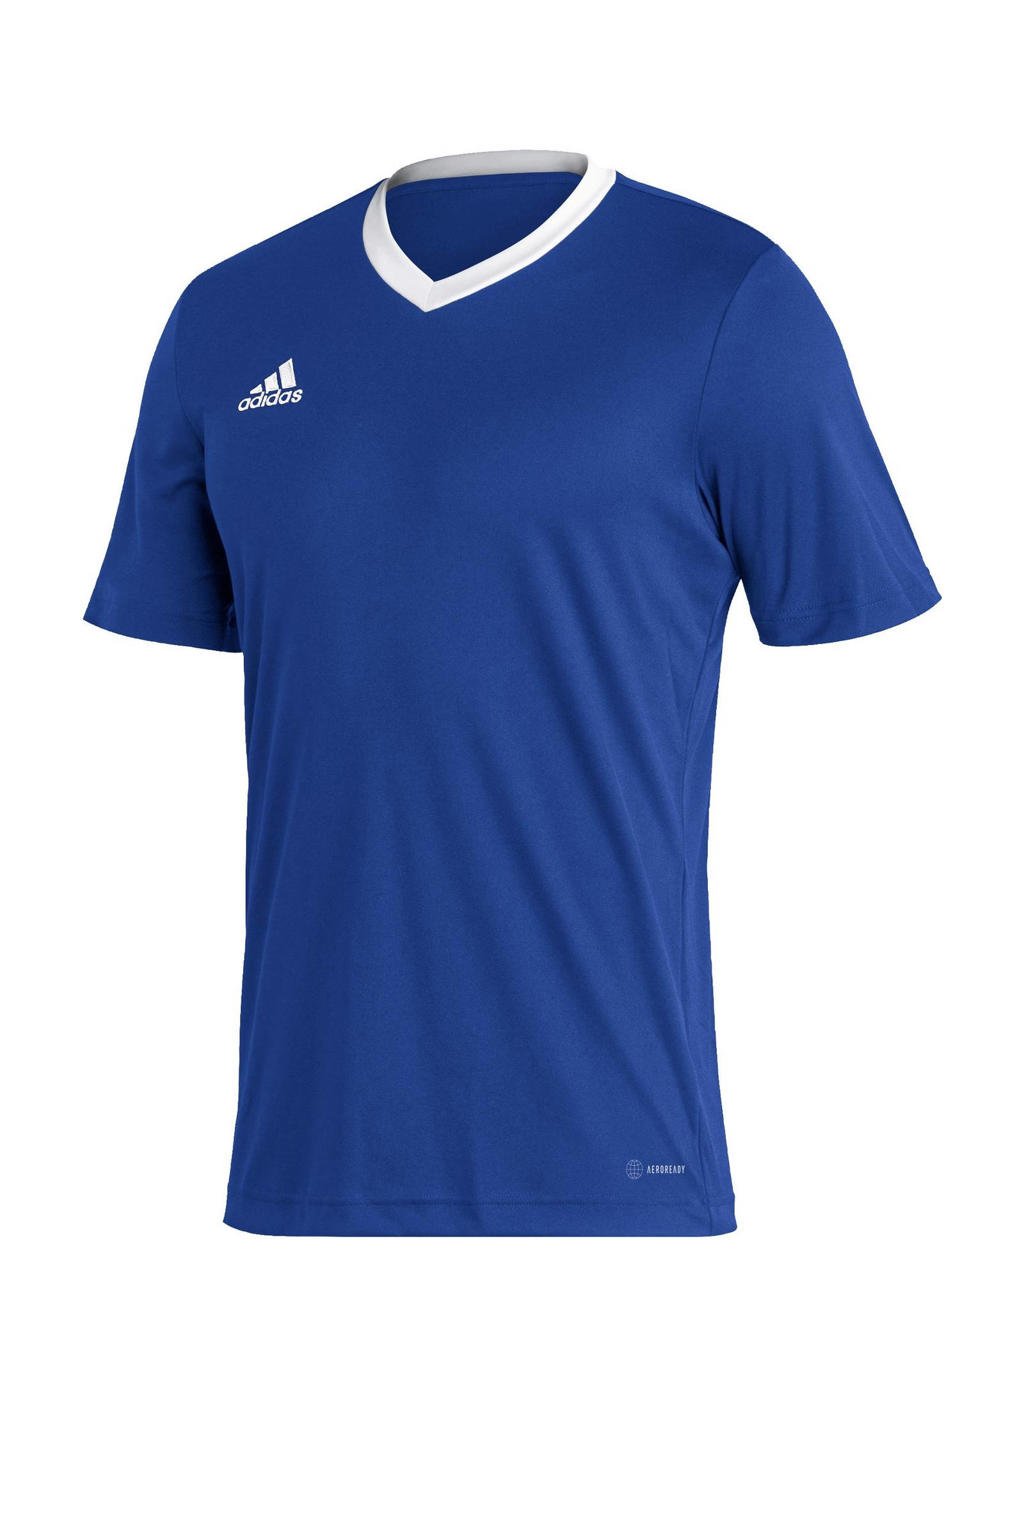 Blauwe heren adidas Performance Senior sport T-shirt van gerecycled polyester met logo dessin, korte mouwen en V-hals